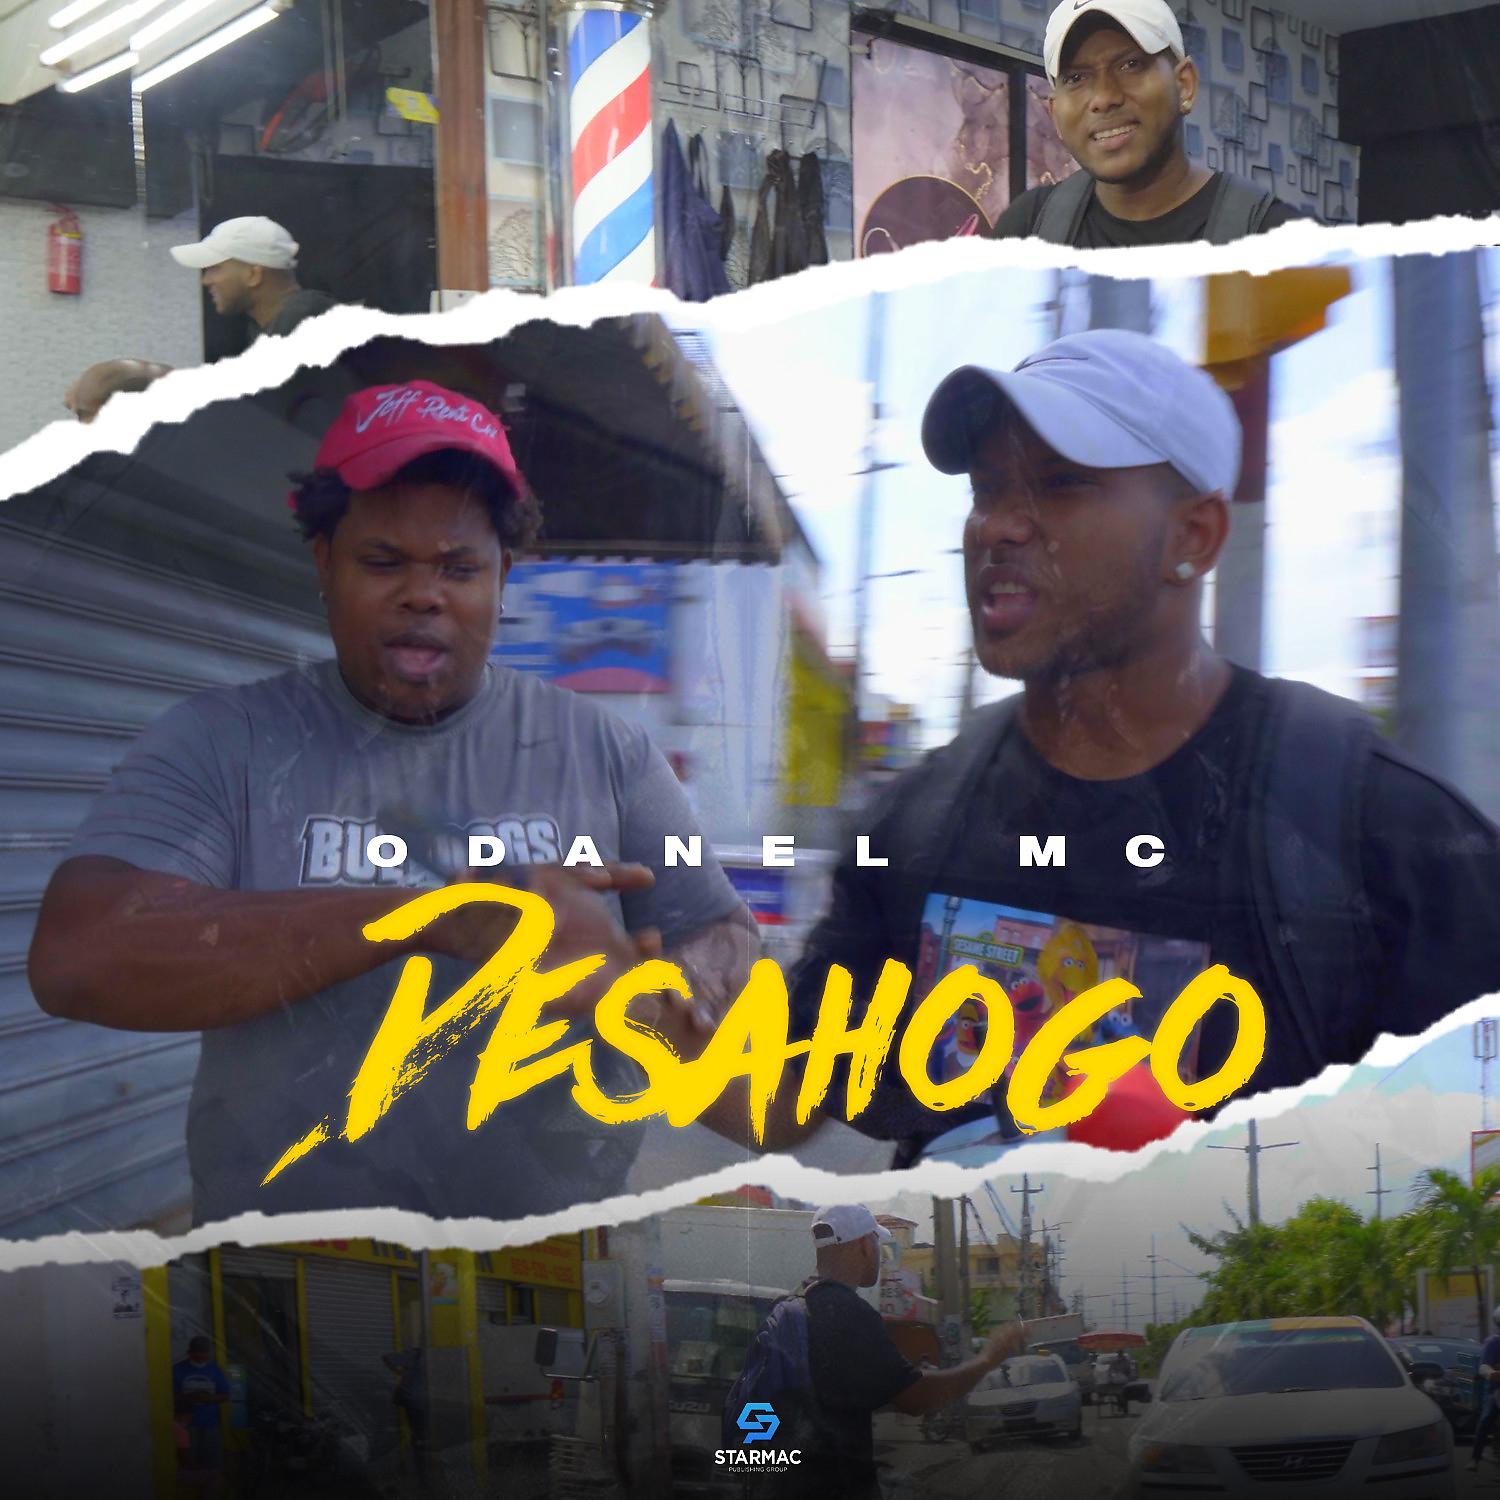 Постер альбома Desahogo